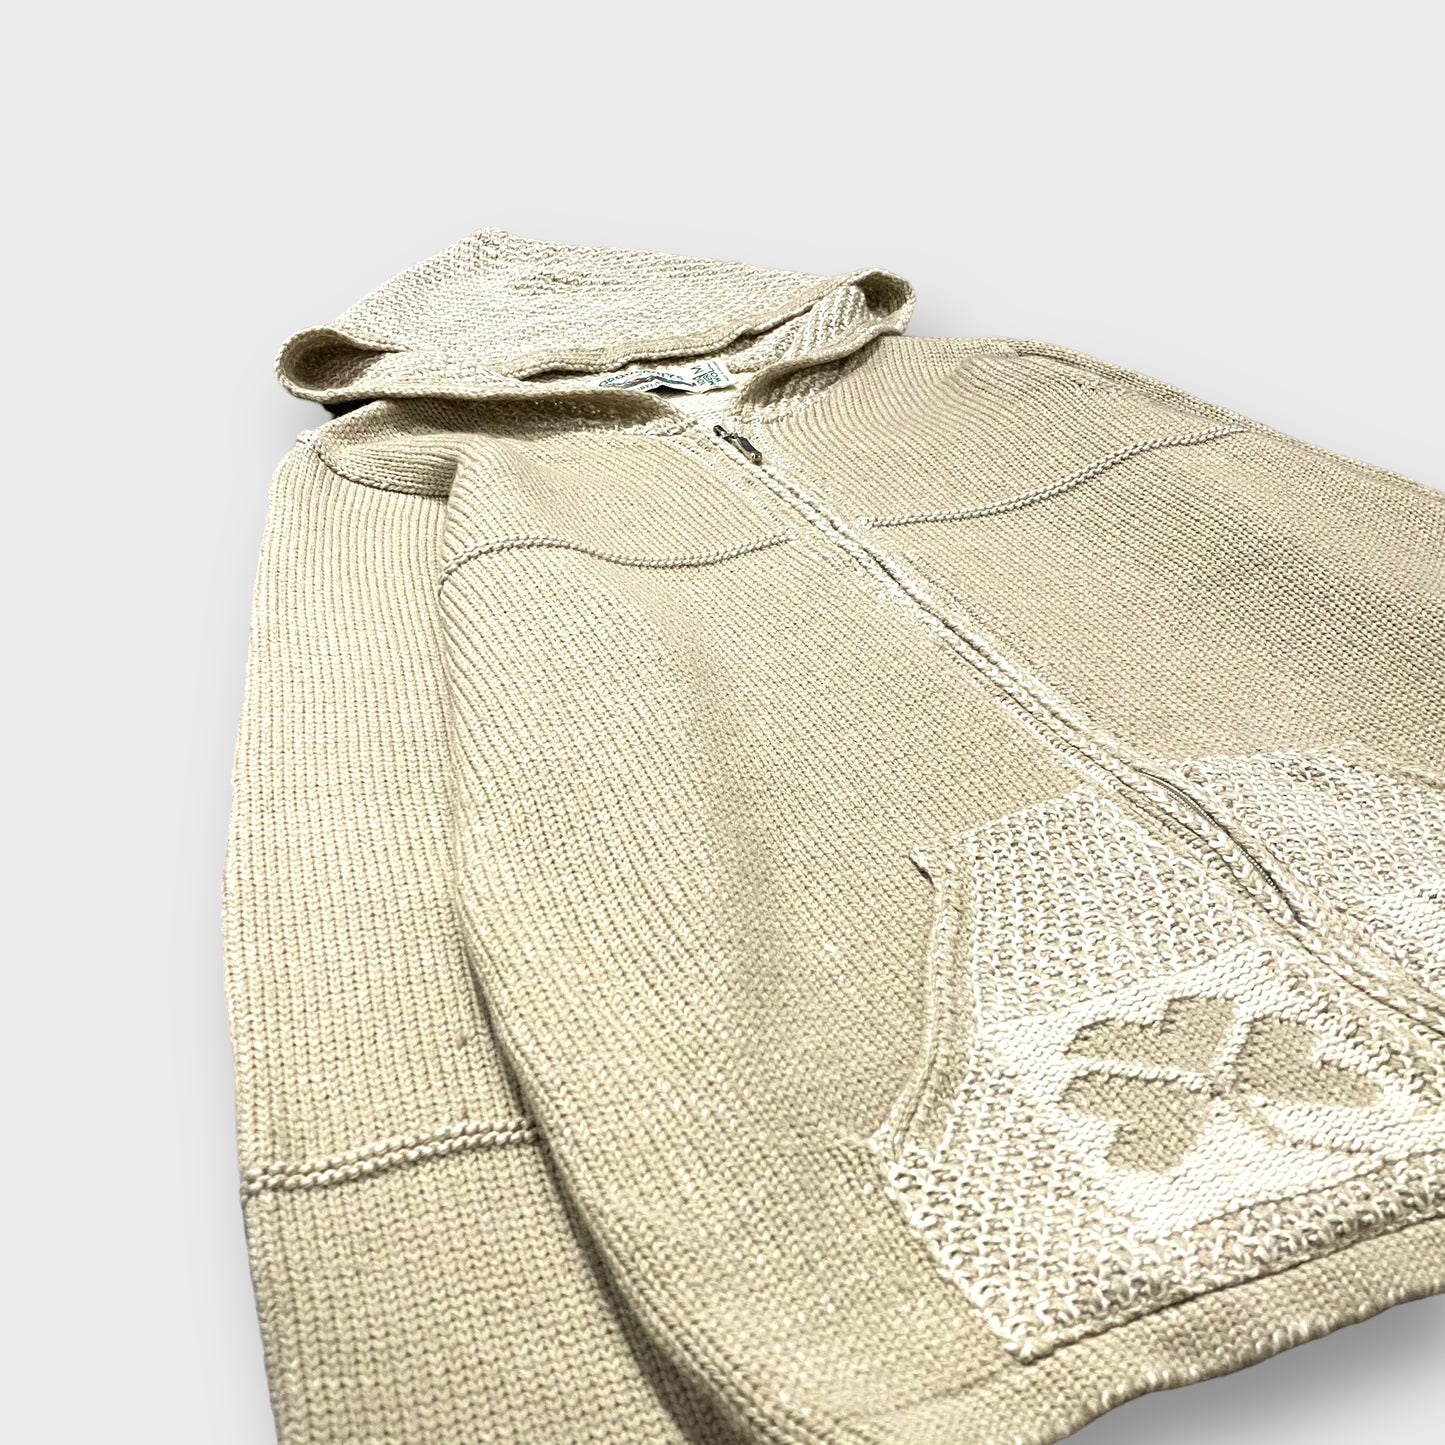 Clover design full zip knit jacket